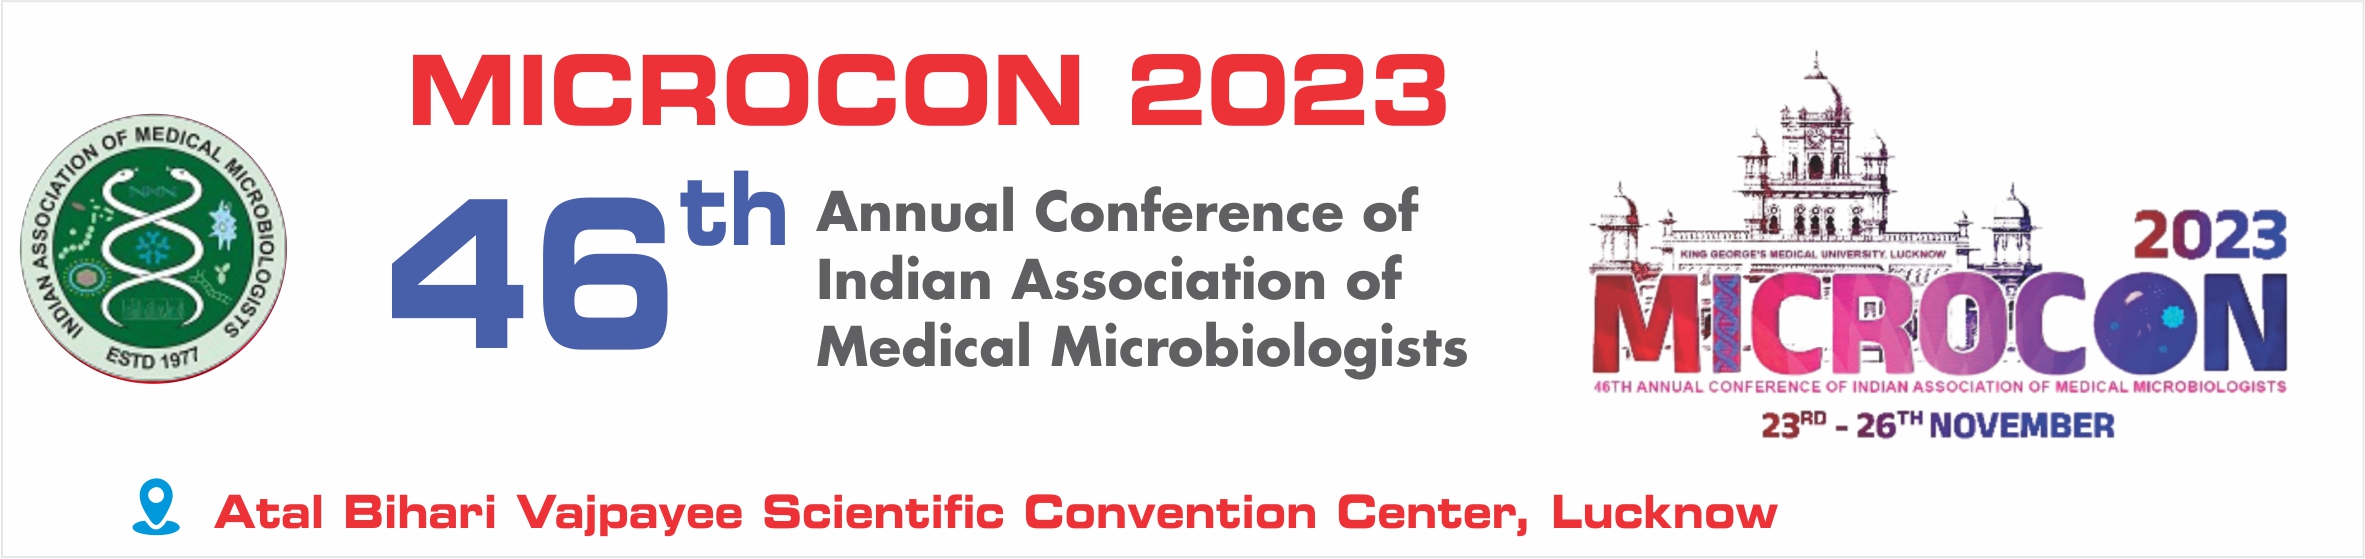 Scientific Program Pre conference/ CME MICROCON 2023 Lucknow